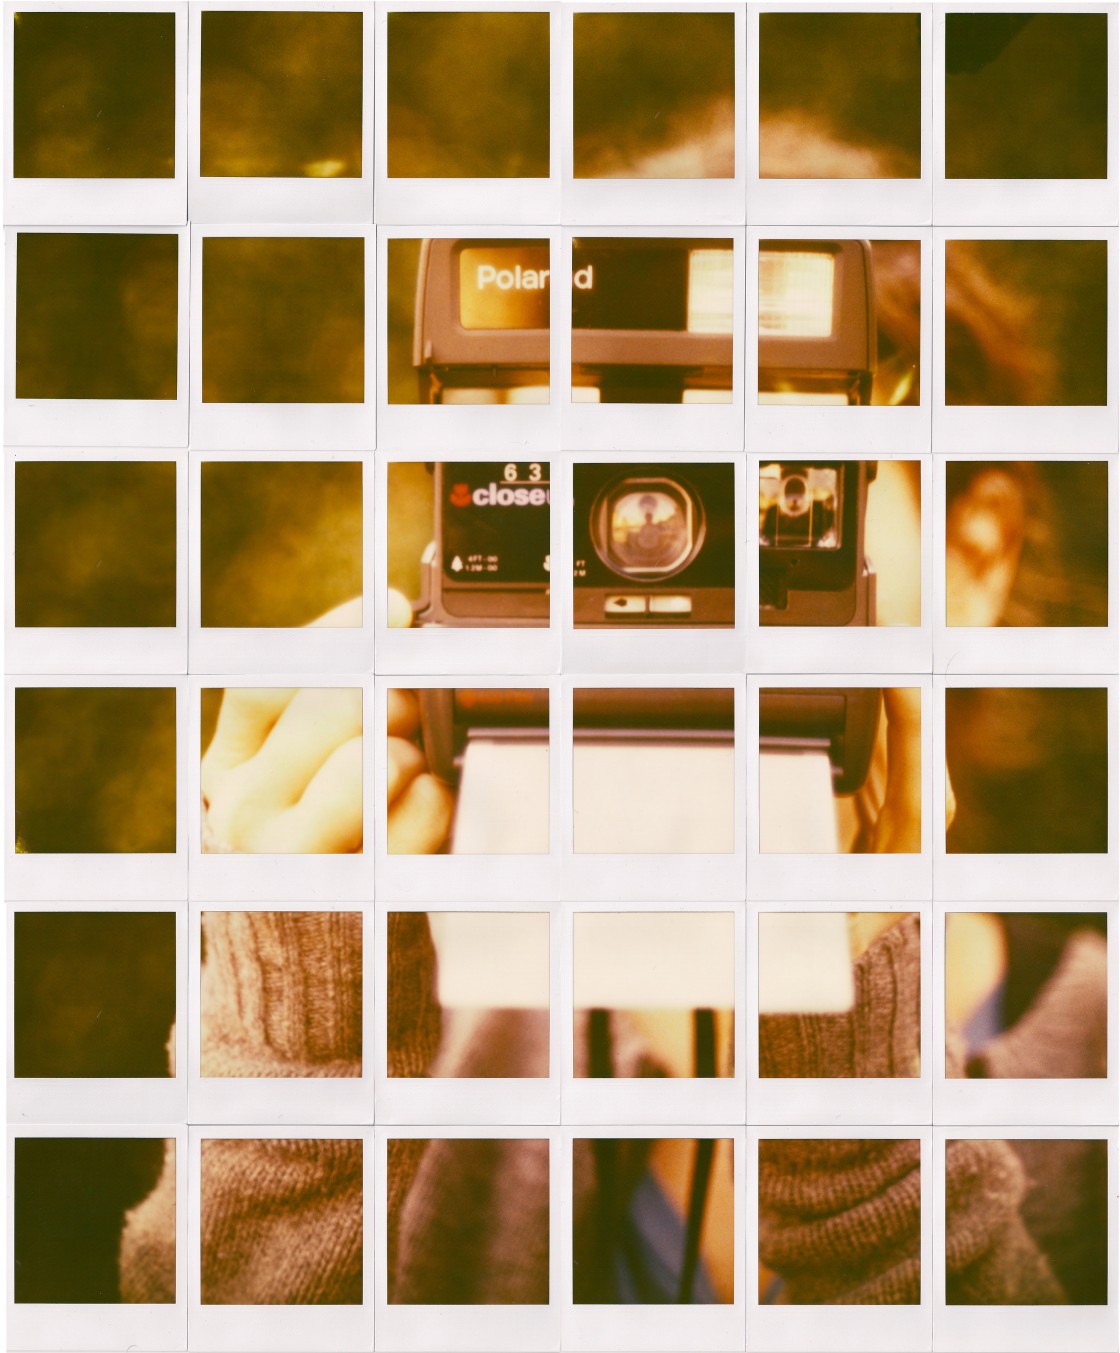 Peter Miller: Polaroid Portrait, 2009.